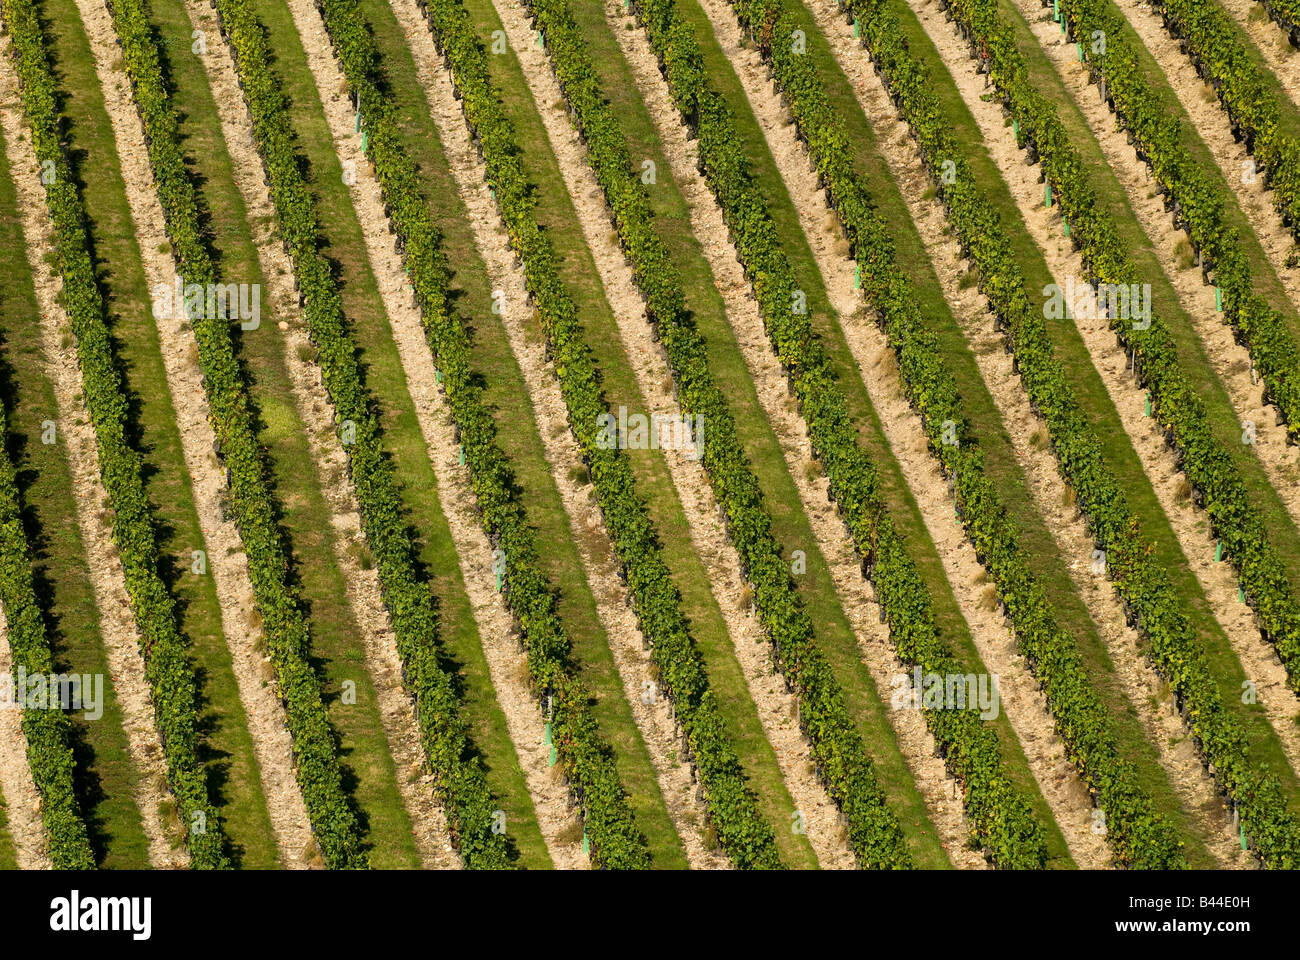 Couly-Dutheil / Clos de l'Echo vineyard, Chinon, France. Stock Photo